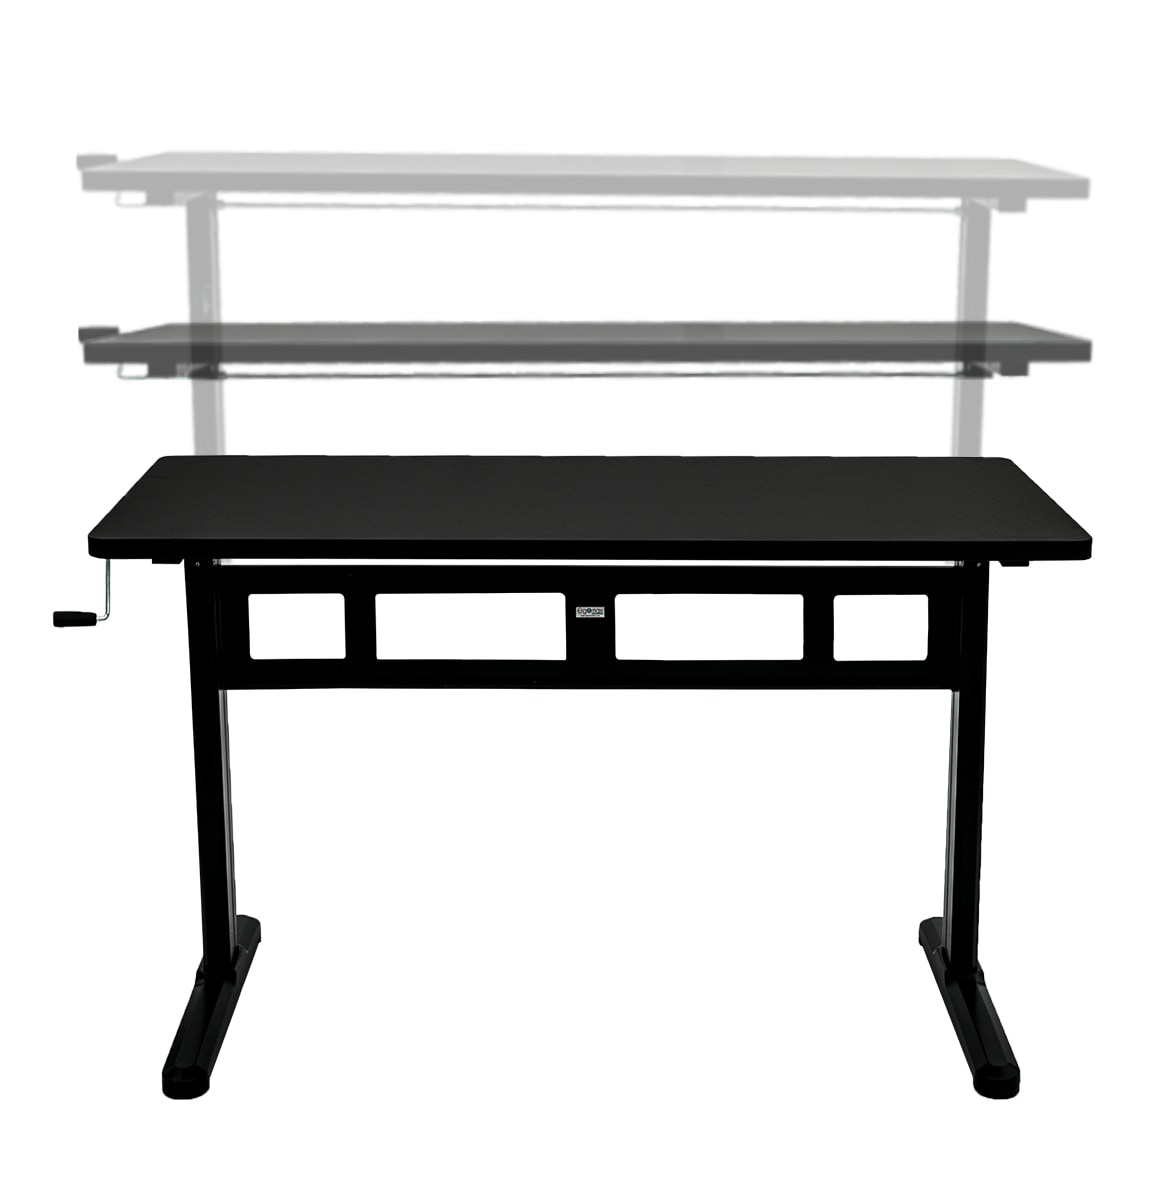 45 Inch Max Black ErgoMax Height Adjustable Crank Desk w/Tabletop